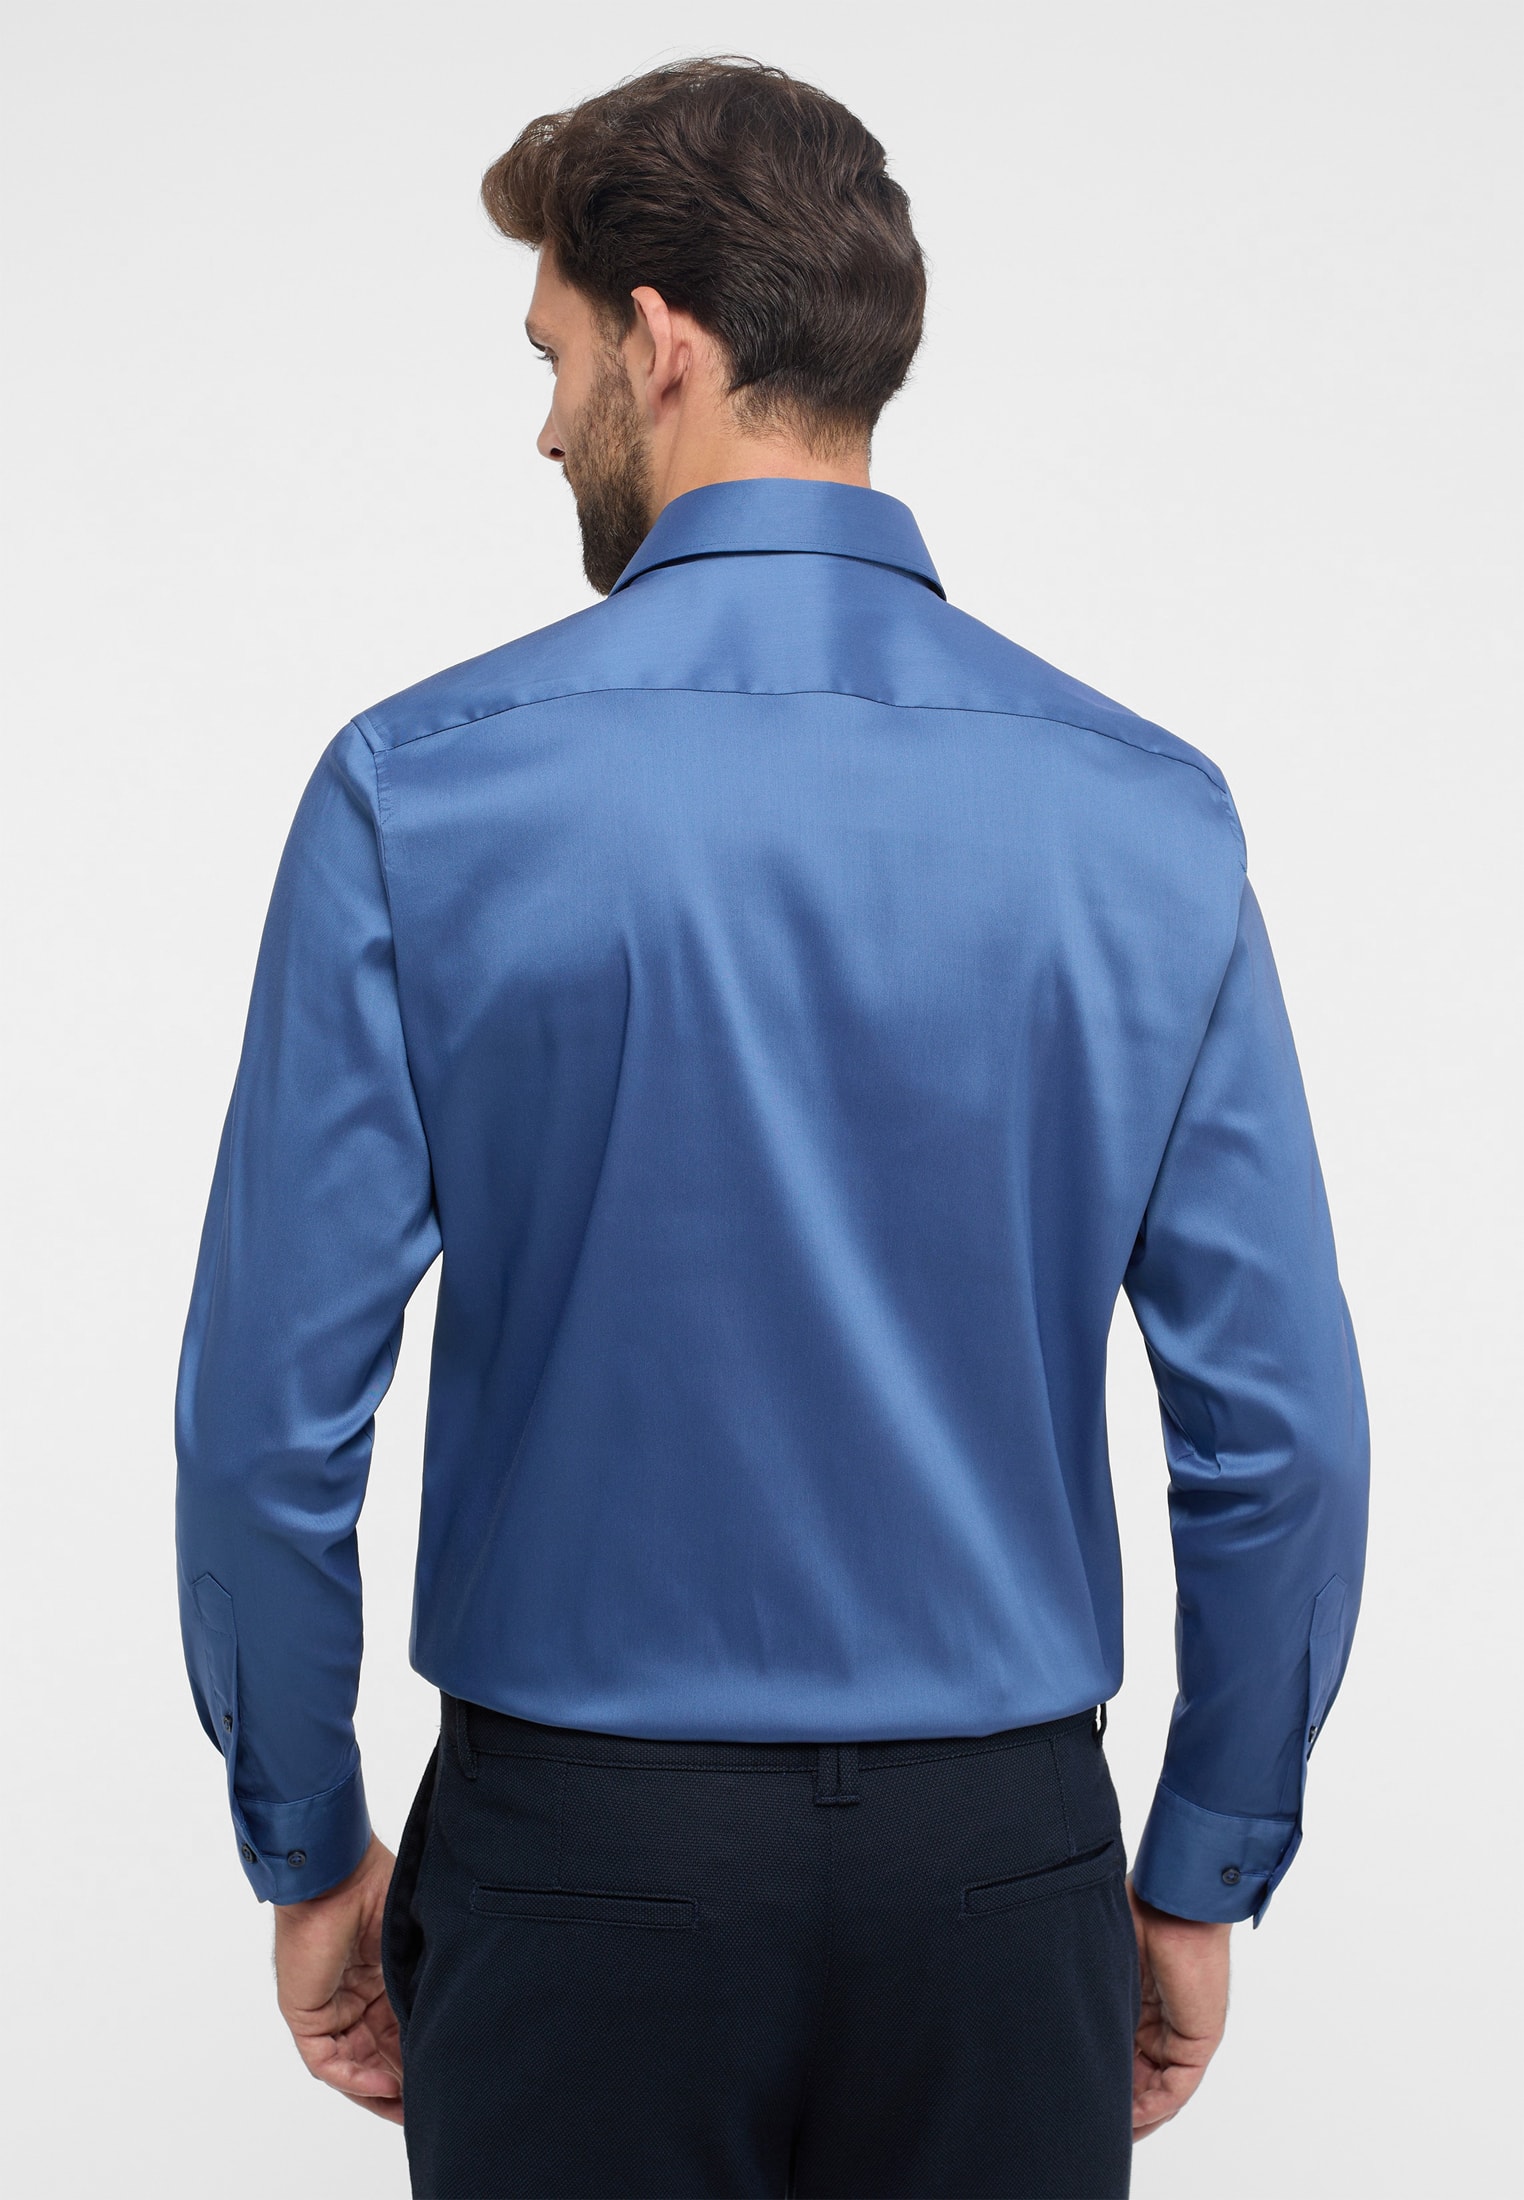 MODERN FIT Performance Shirt in rauchblau unifarben | rauchblau | 44 |  Langarm | 1SH02224-01-62-44-1/1 | Breite Krawatten